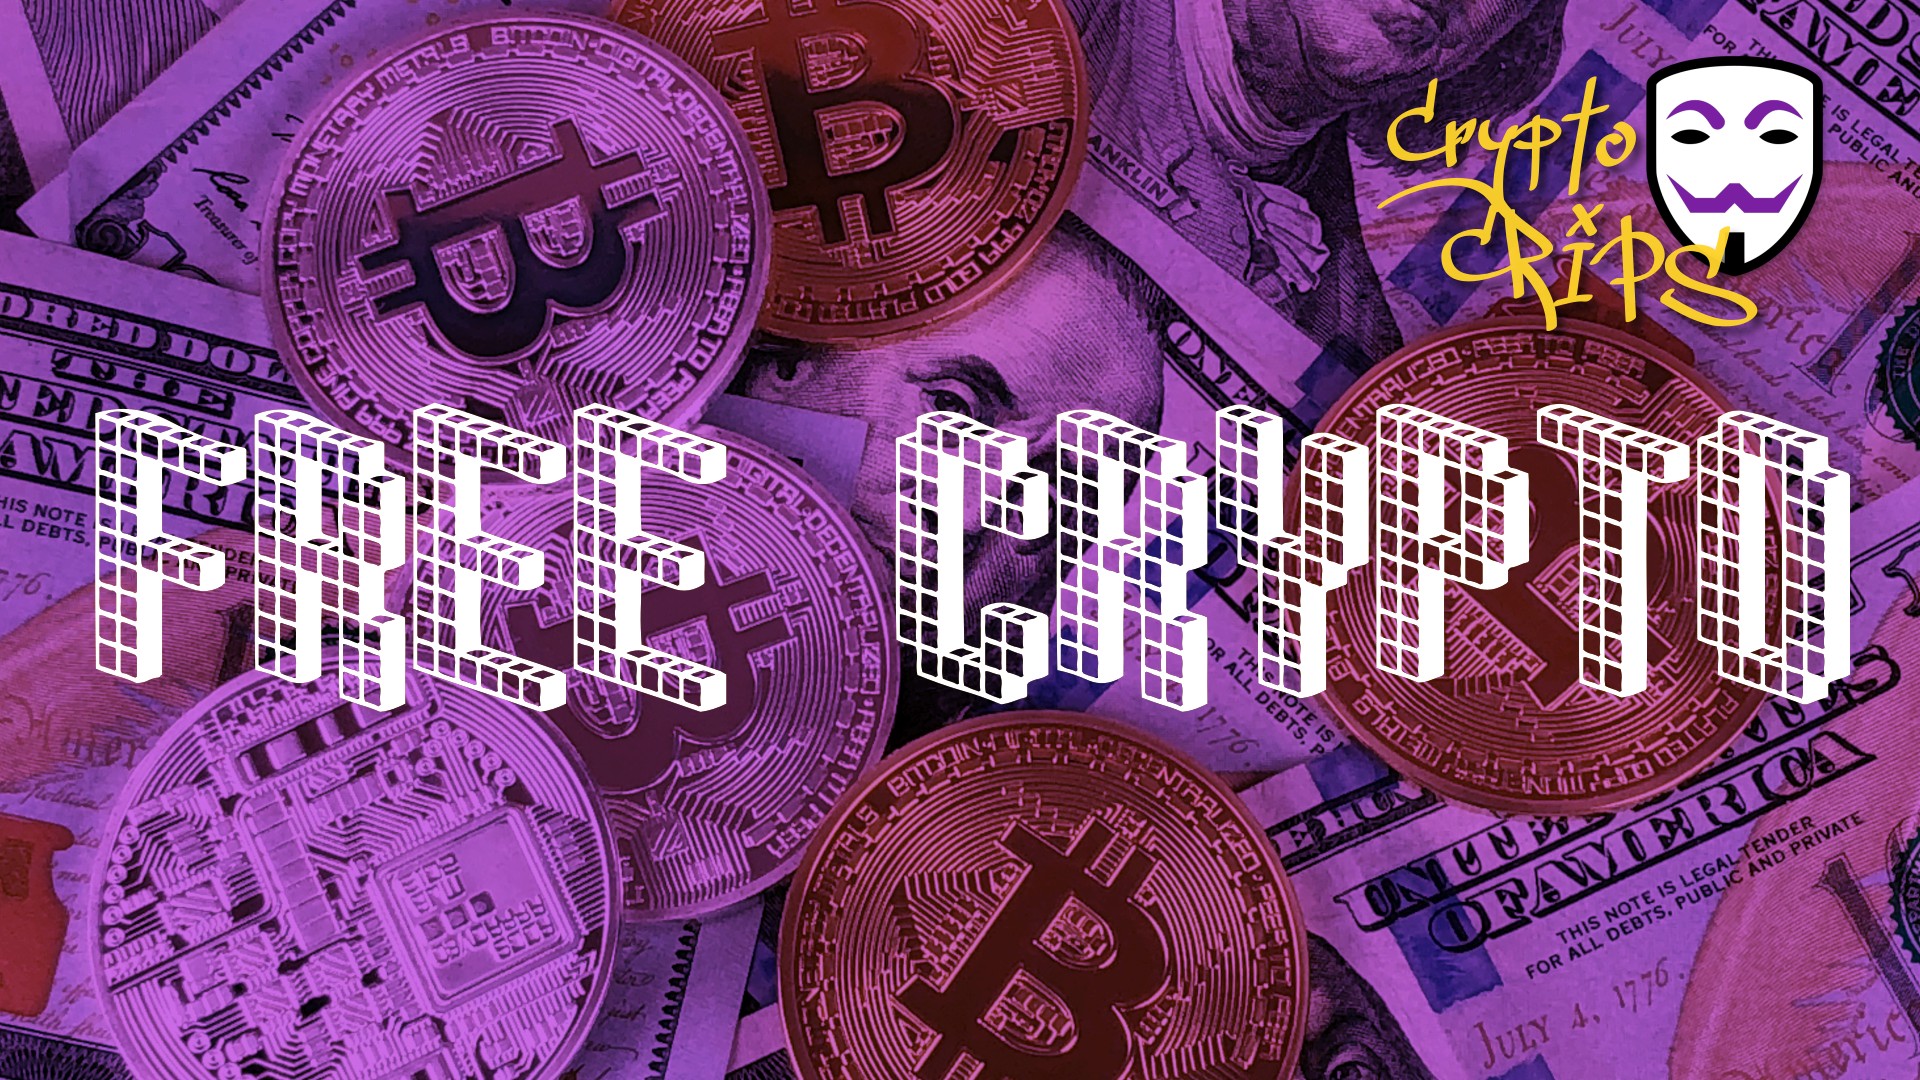 Get free Crypto: No Scam, no Bullshit! | cryptocrips.org